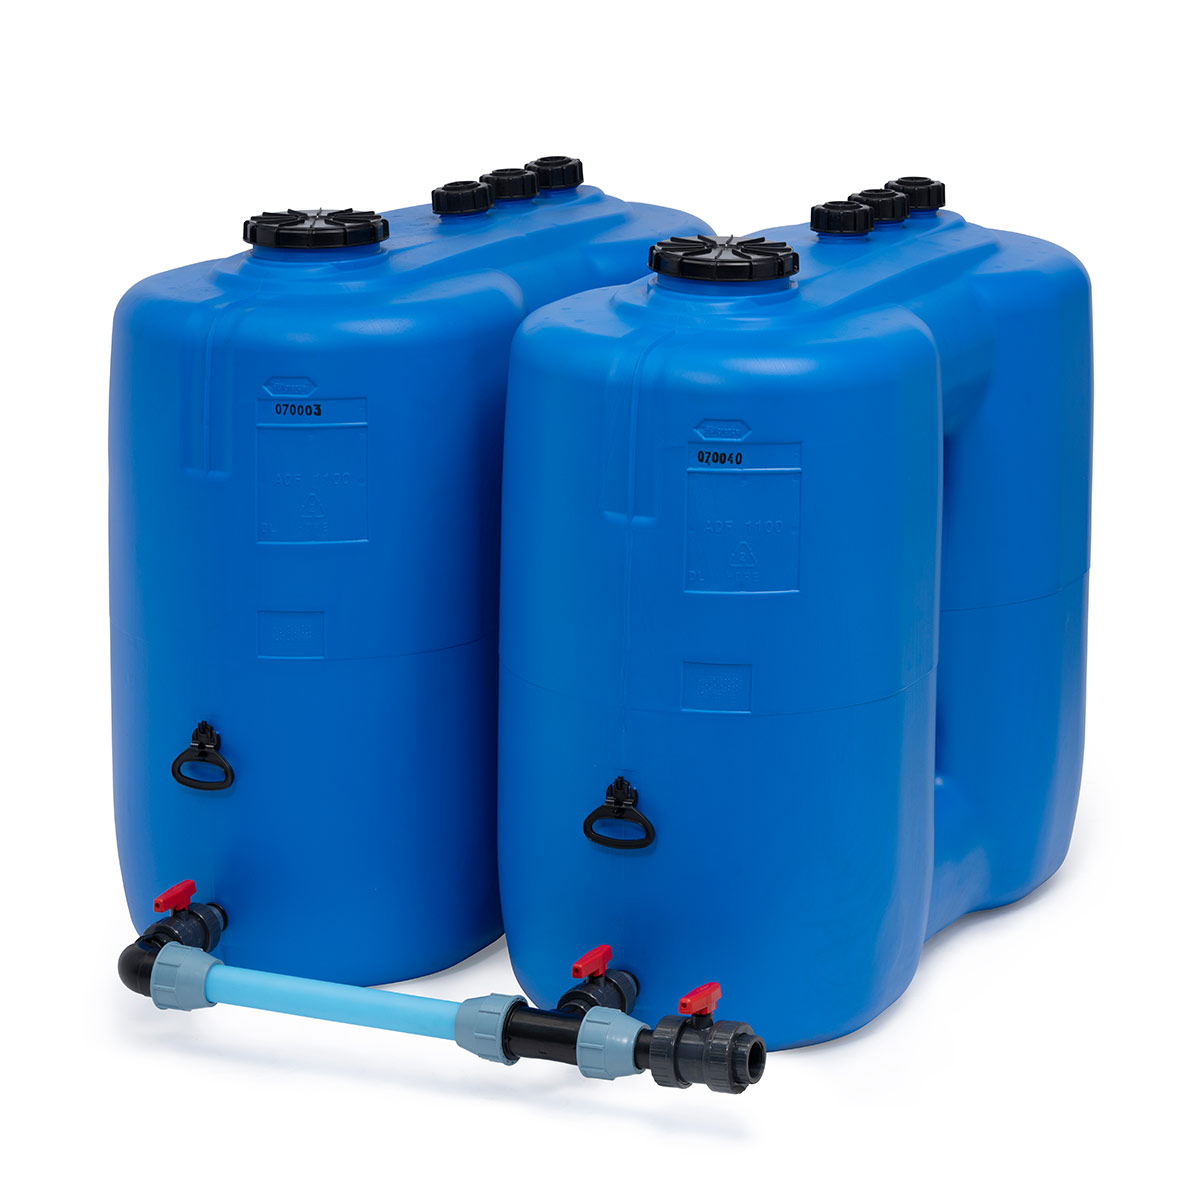 Lagertank AQF blau, 1100 l, aus PE-HD, Trinkwasser geeignet